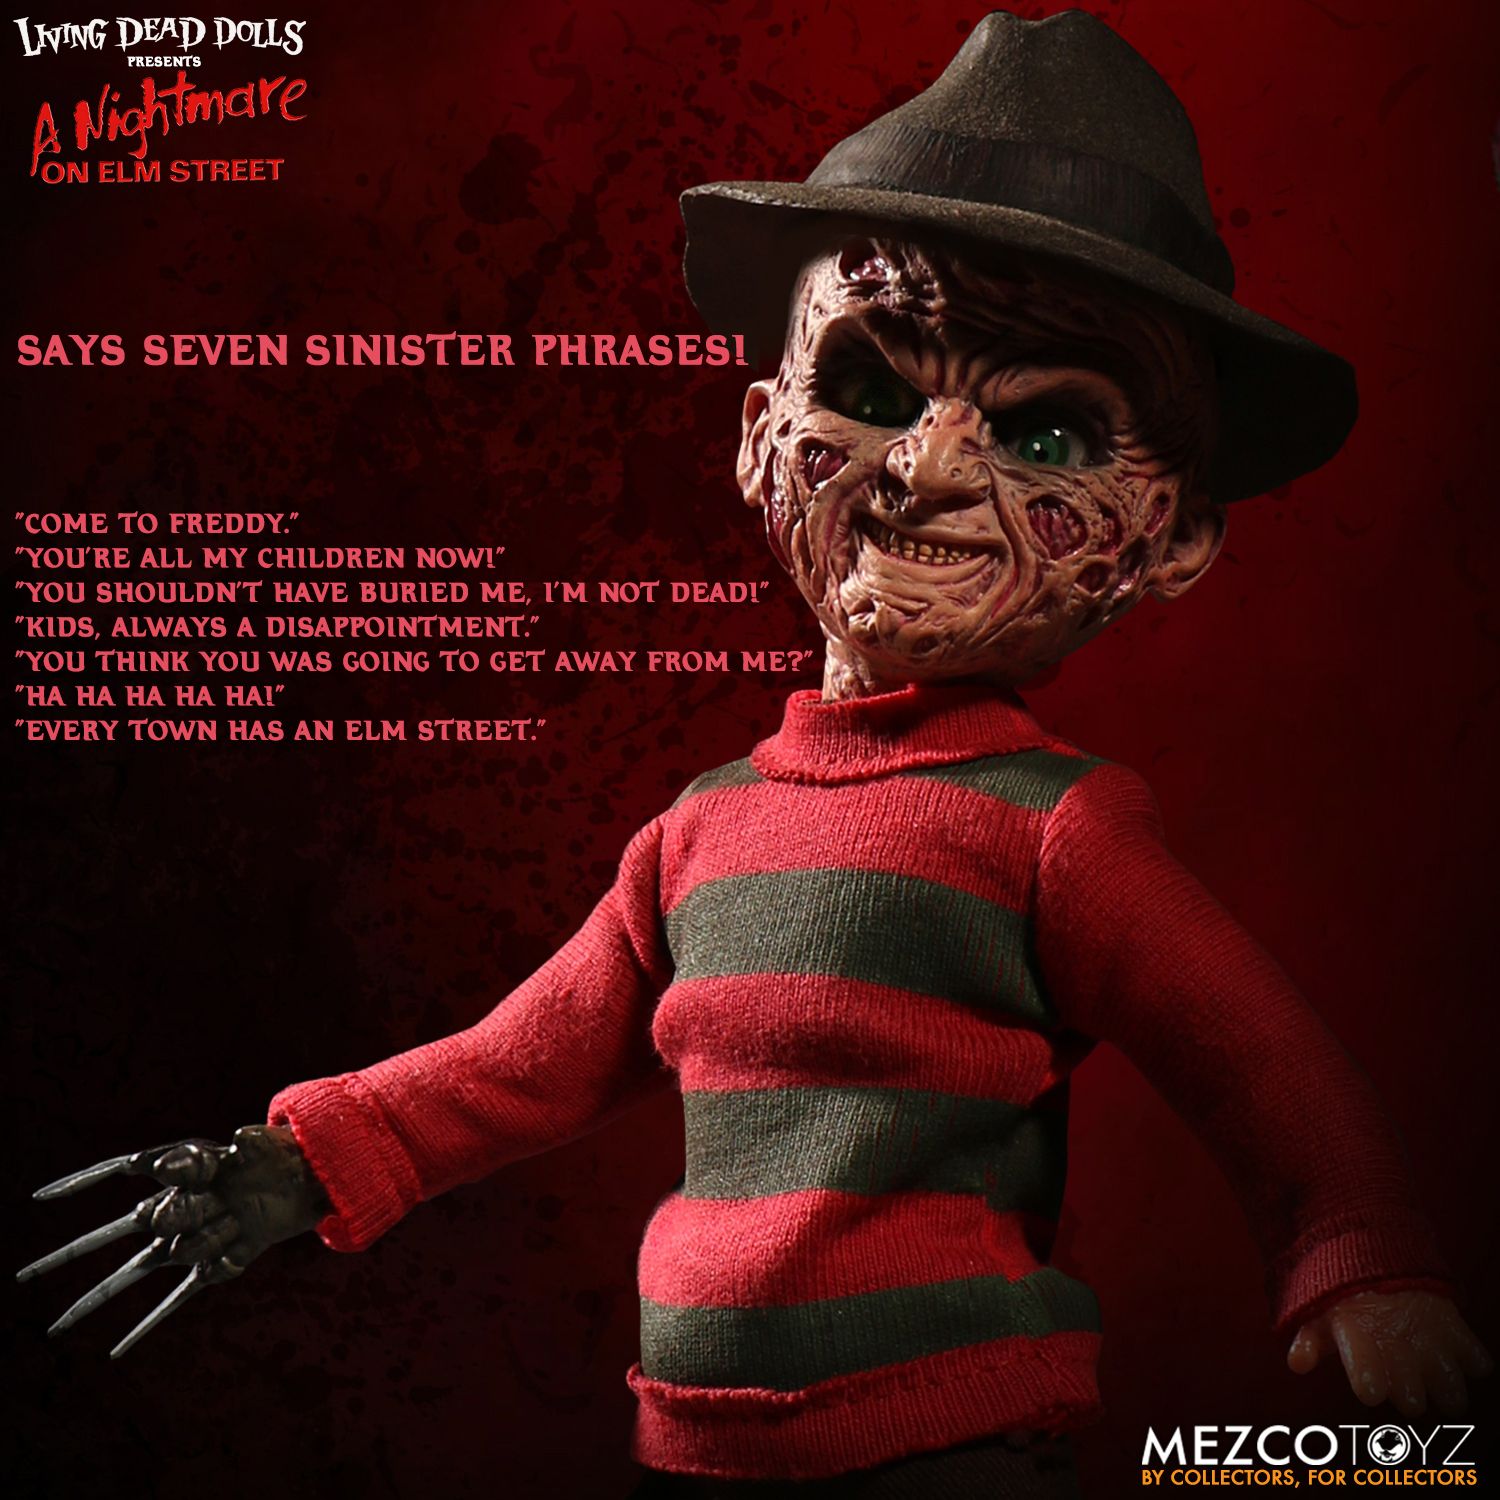 Freddy Krueger with Sound Living Dead Dolls A Nightmare on Elm Street Talking